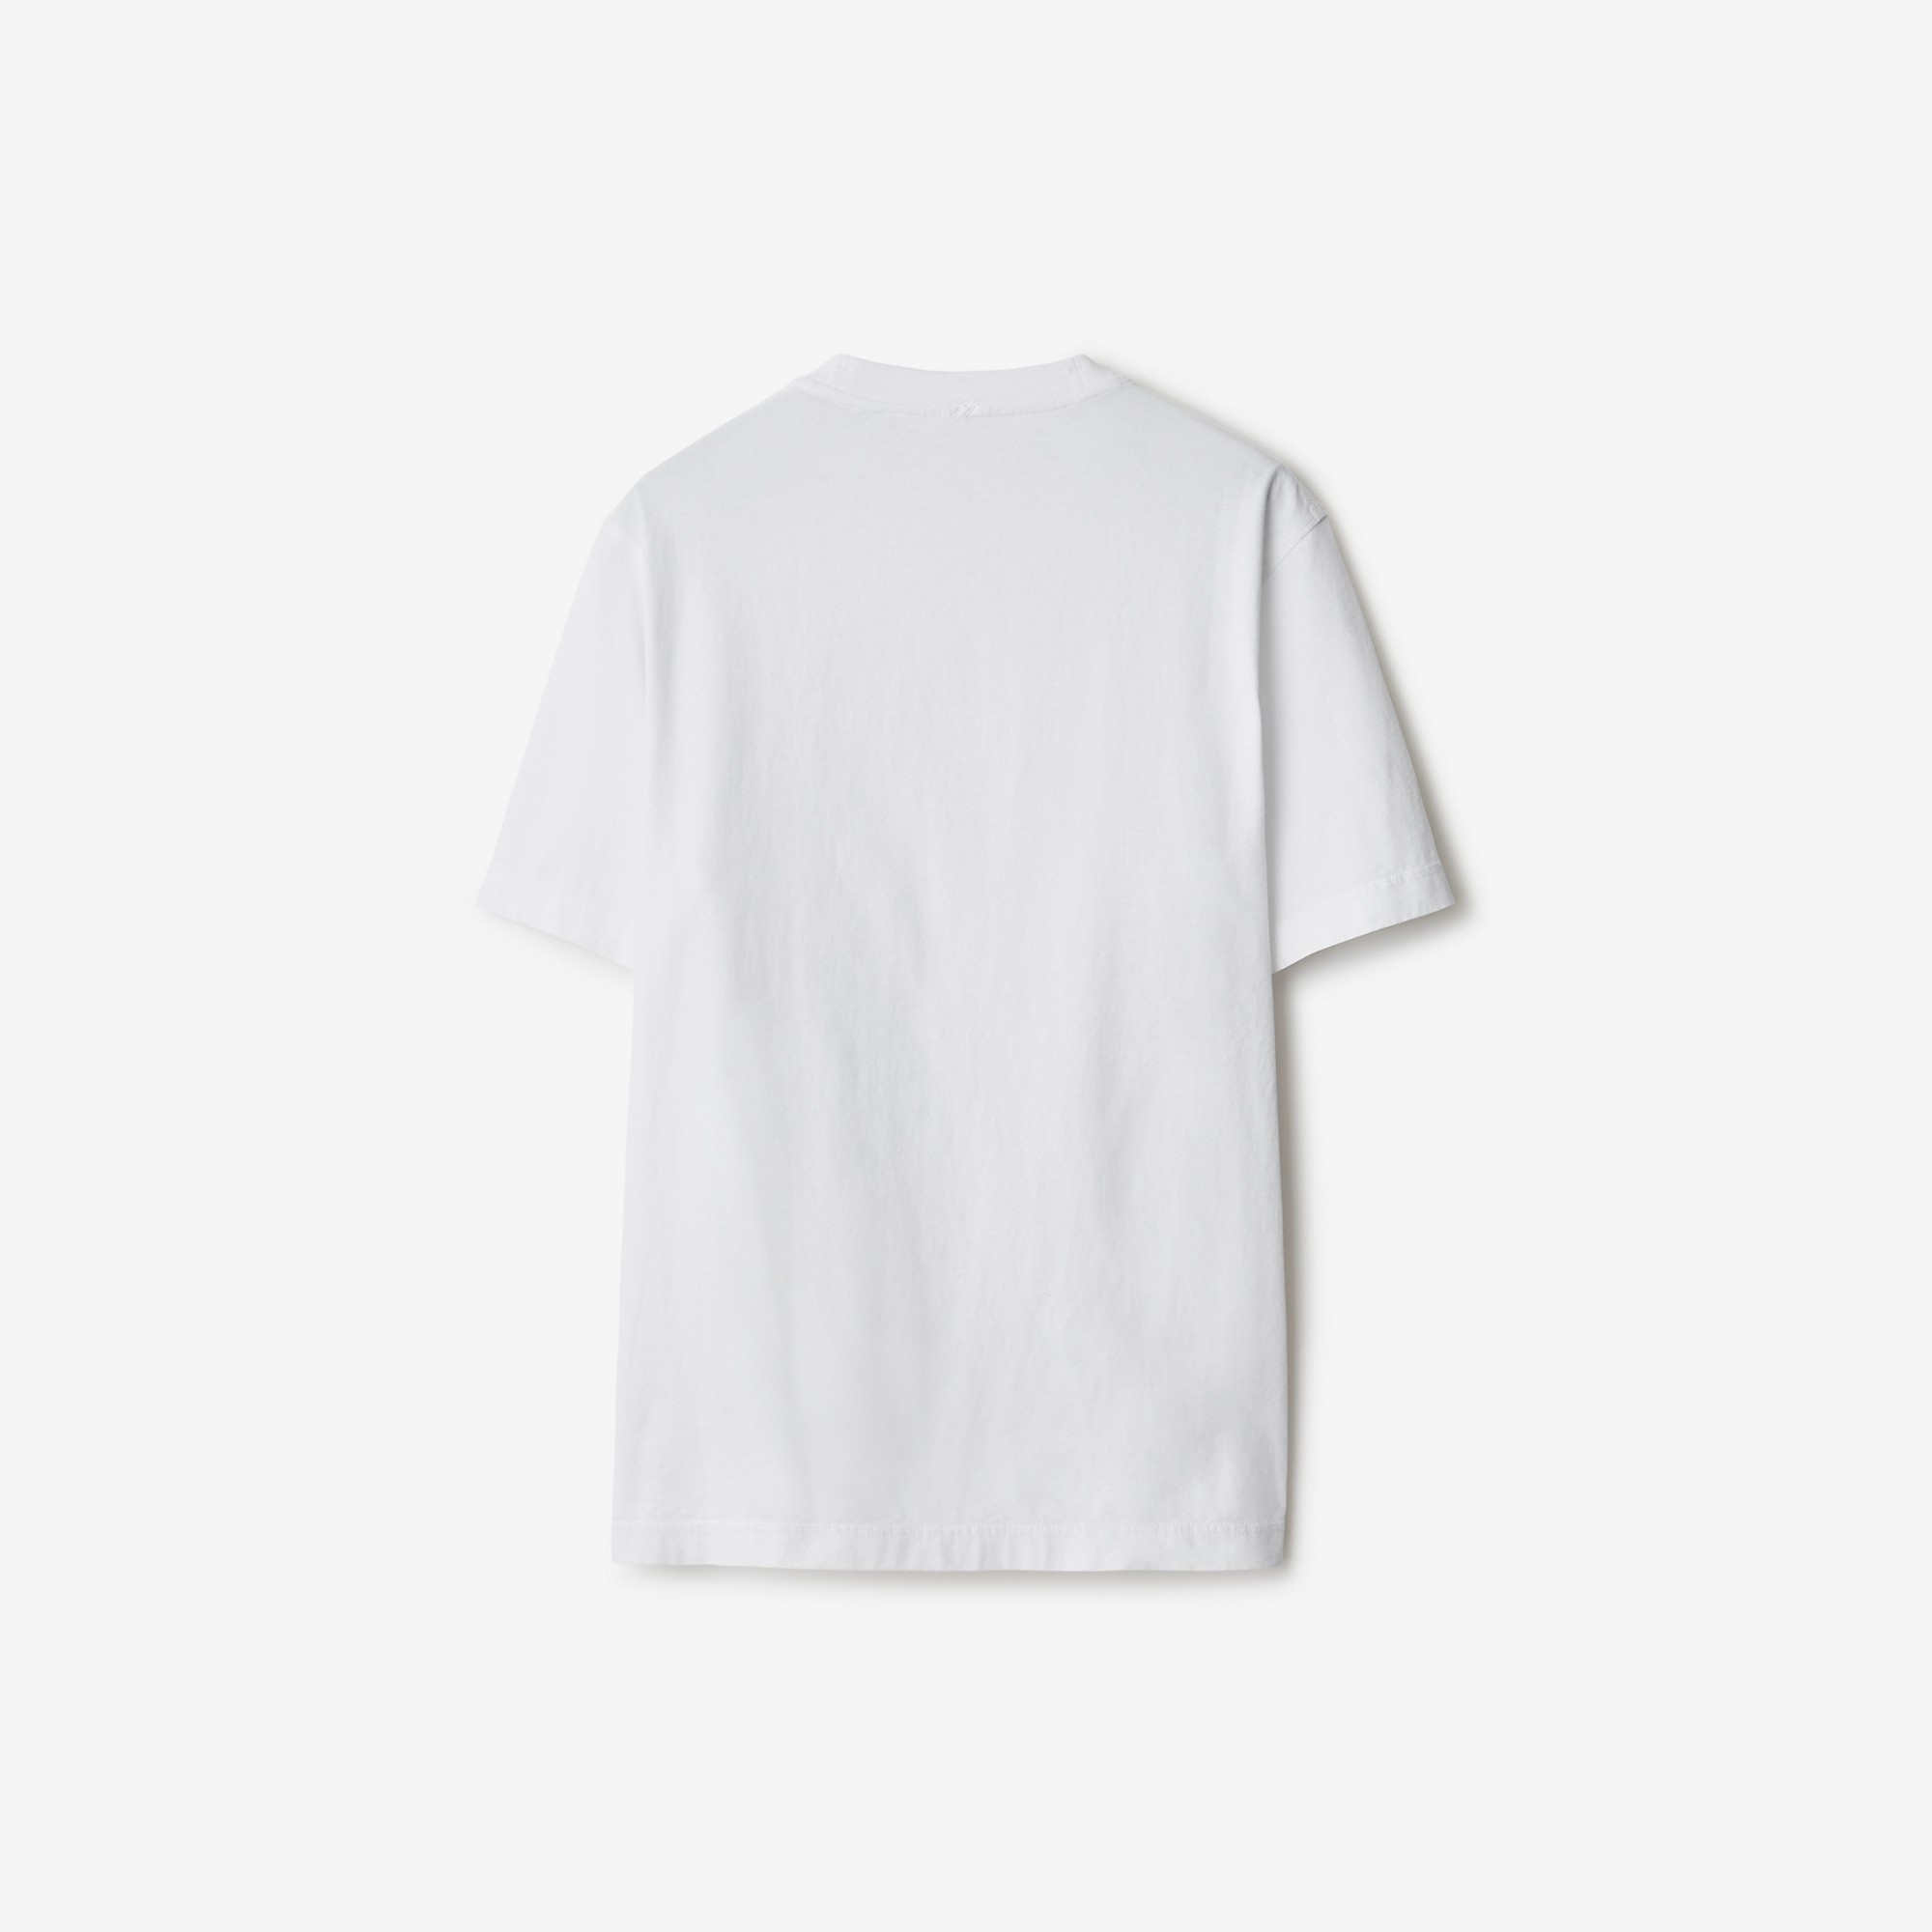 Knight Hardware Cotton T-shirt - 5